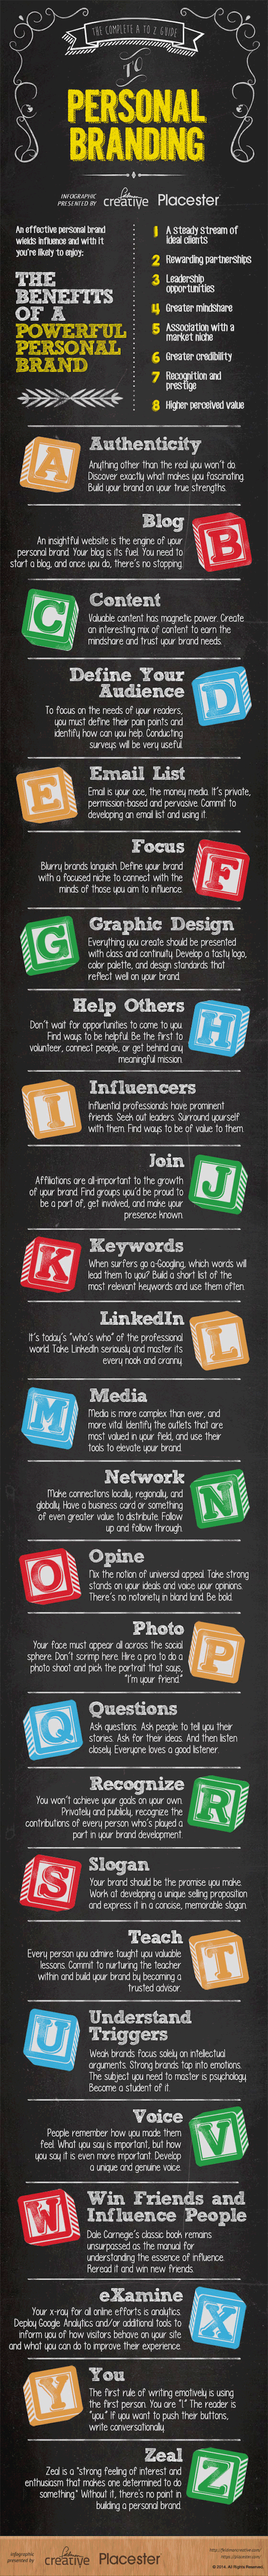 personal-branding-infographic